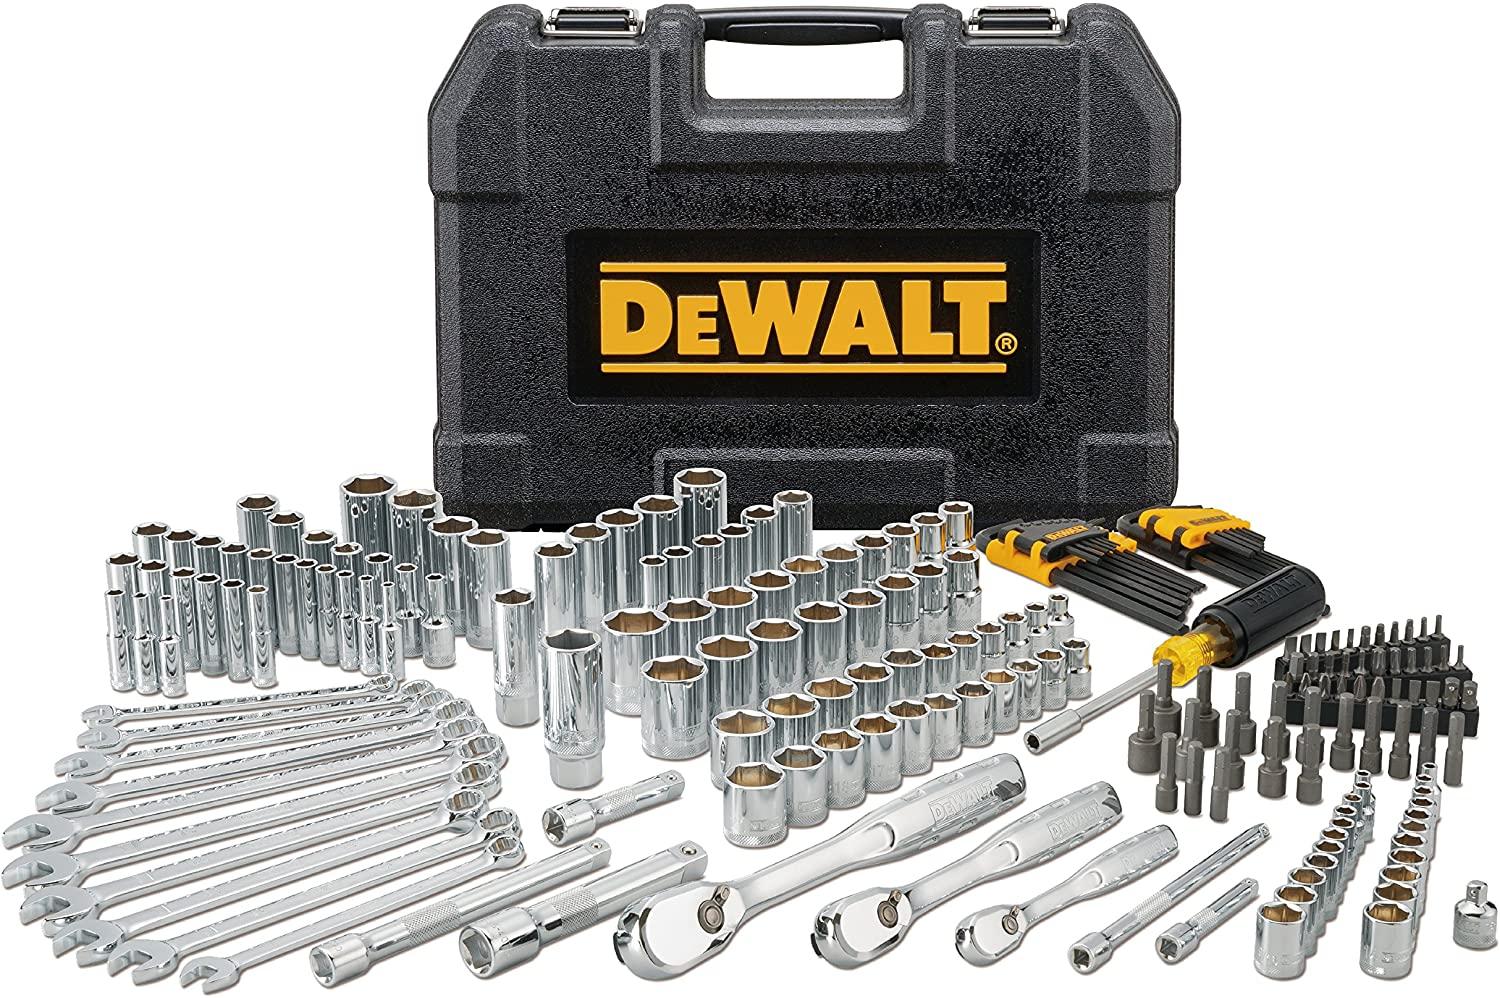 Dewalt 200-Piece Mechanics Tool Set for $109.99 Shipped